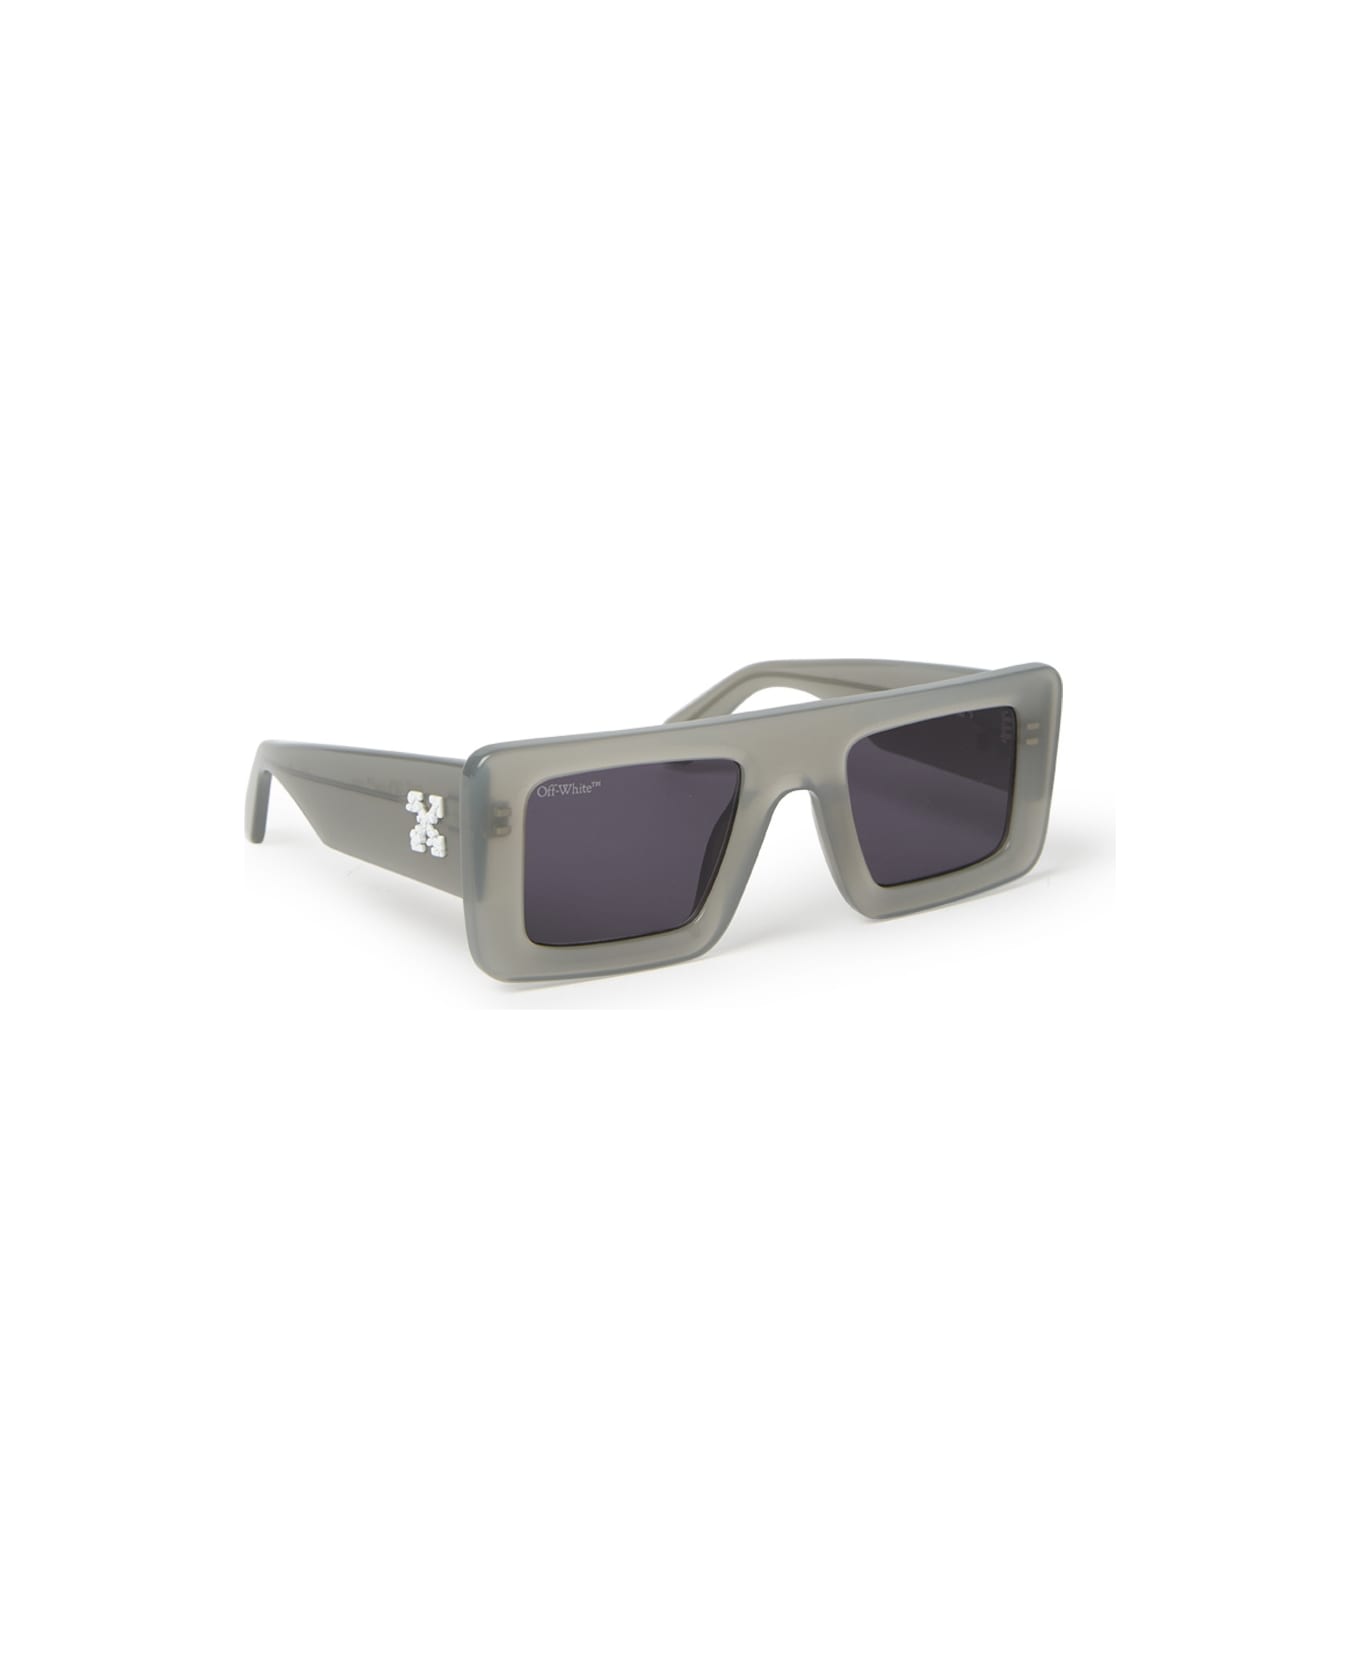 Off-White Seattle Sunglasses Sunglasses - Grey